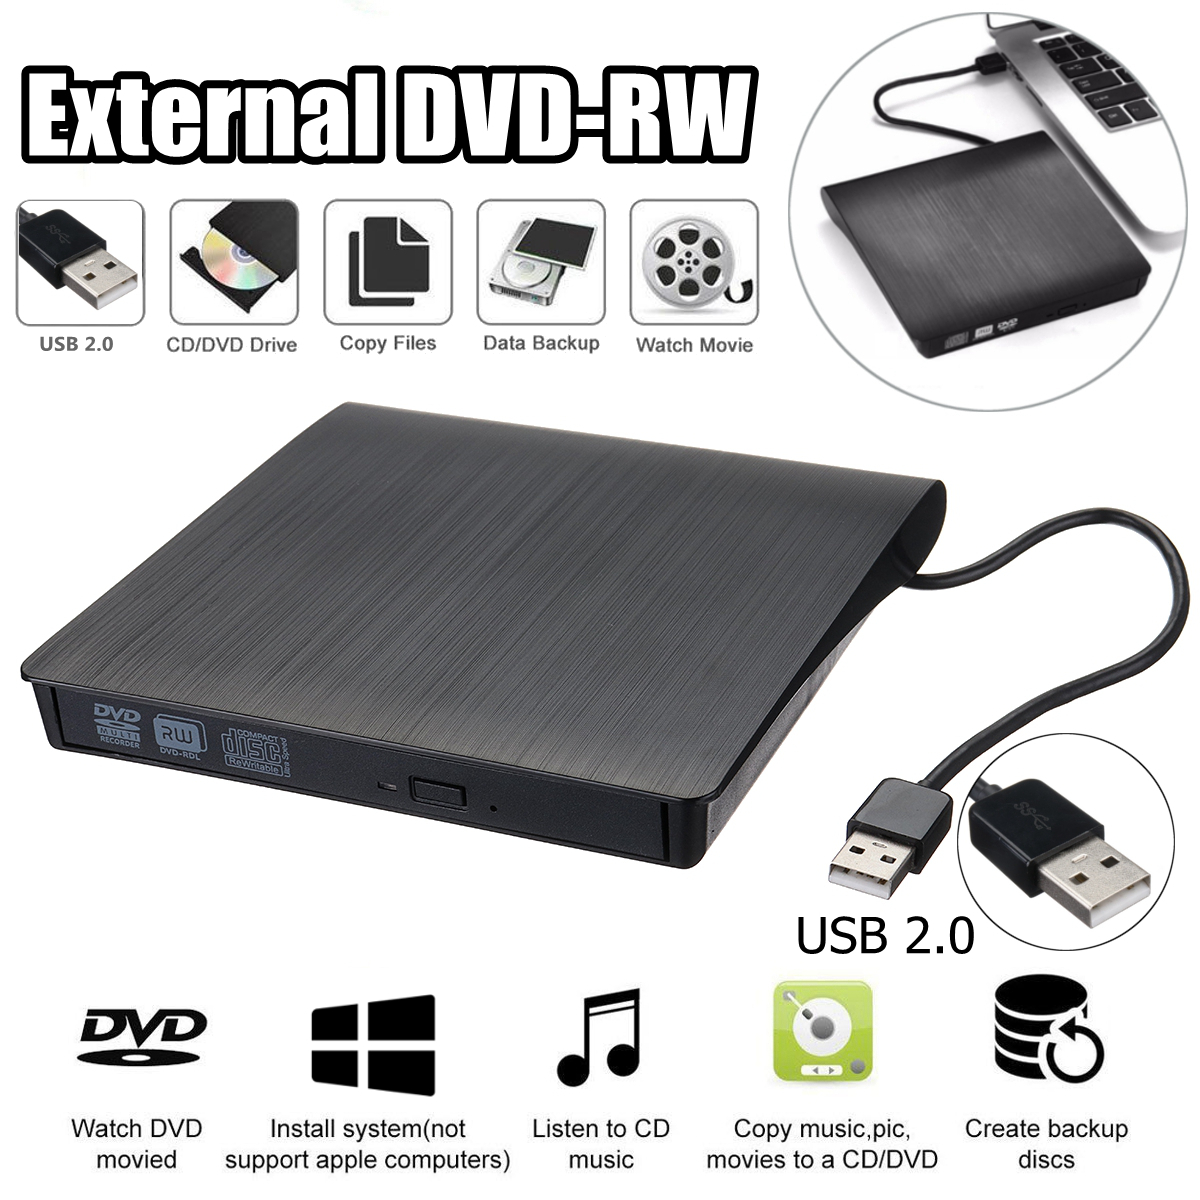 External-USB-20-DVD-RW-CD-Writer-Slim-Optical-Drive-Burner-Reader-Player-For-PC-Laptop-Business-Offi-1535879-9